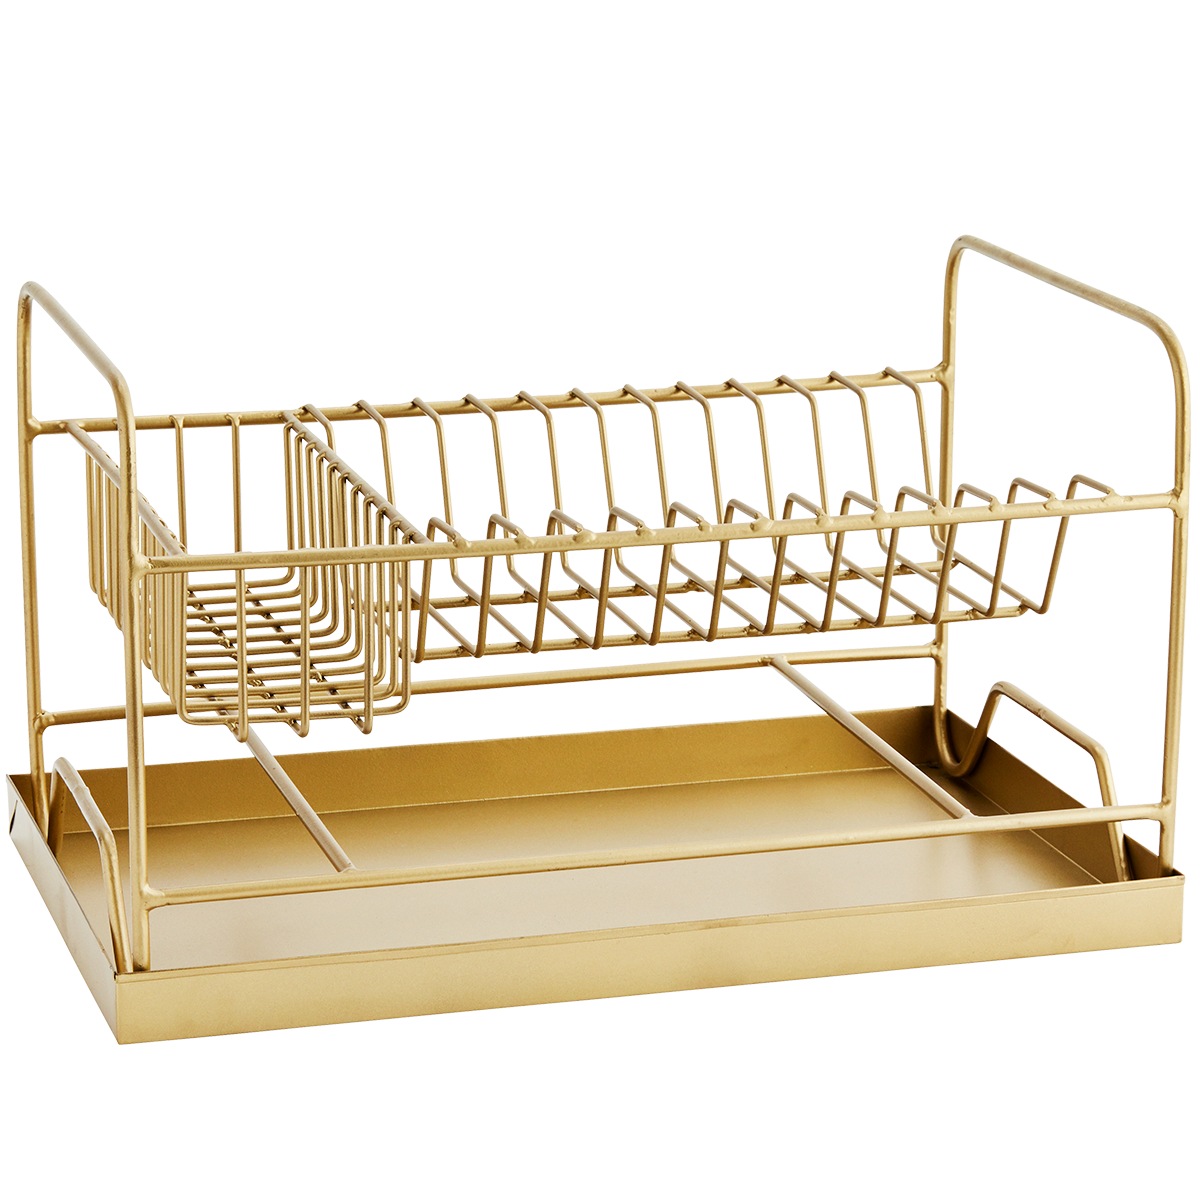 https://royaldesign.com/image/2/madam-stoltz-dish-drainer-with-drip-tray-brass-0?w=800&quality=80